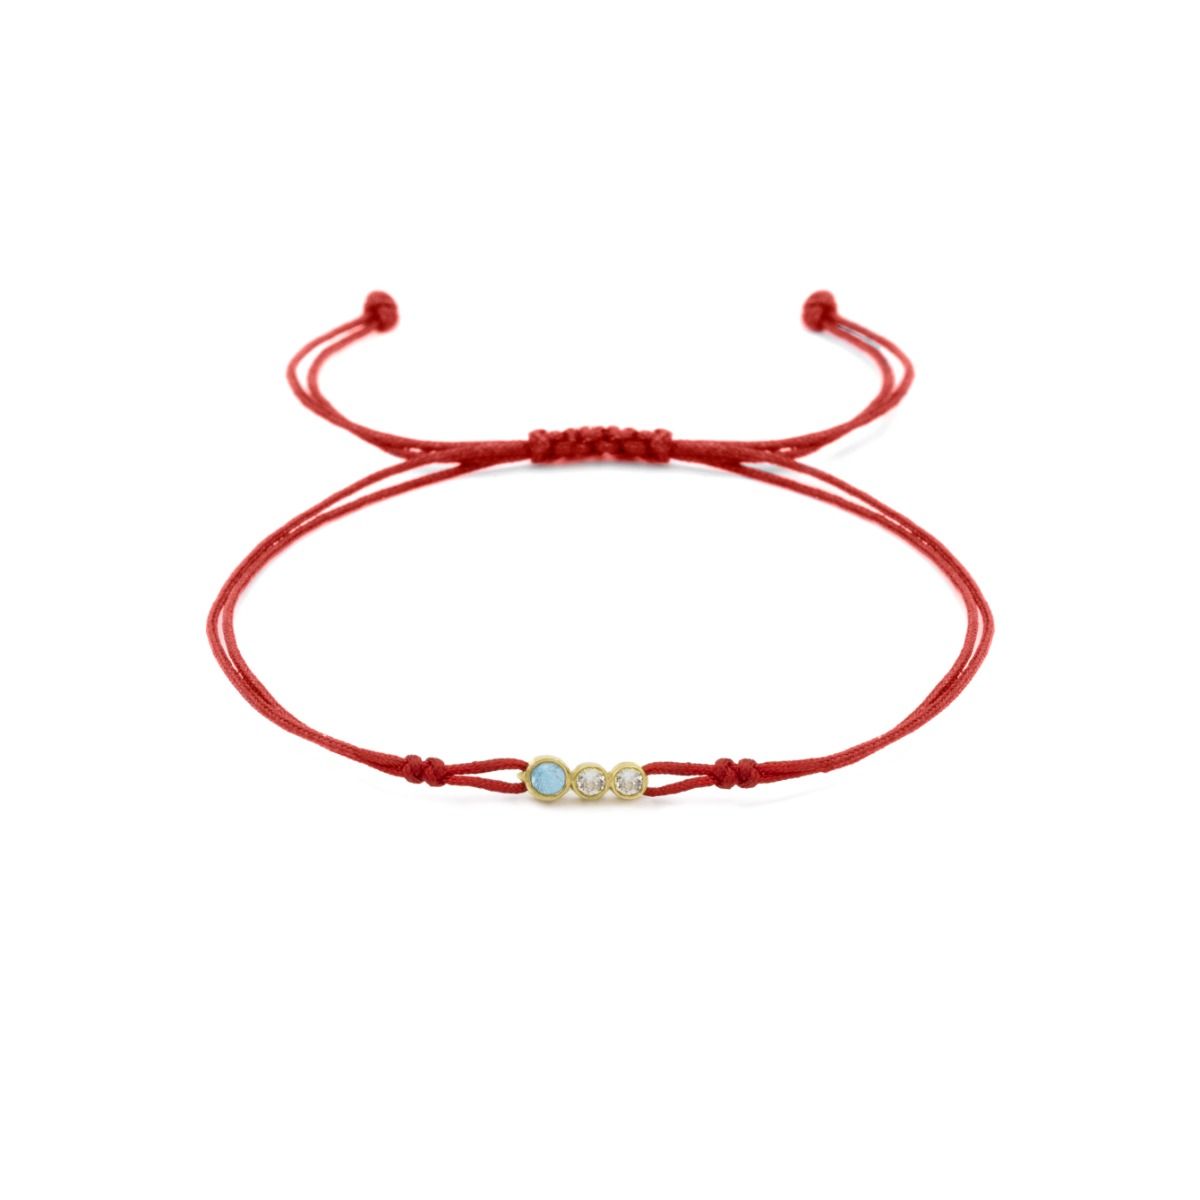 A Mother's Love Diamond Bracelet - Red String [Topaz & White Diamonds / 14  Karat Gold] - 1 Large Topaz + 5 Small Diamonds